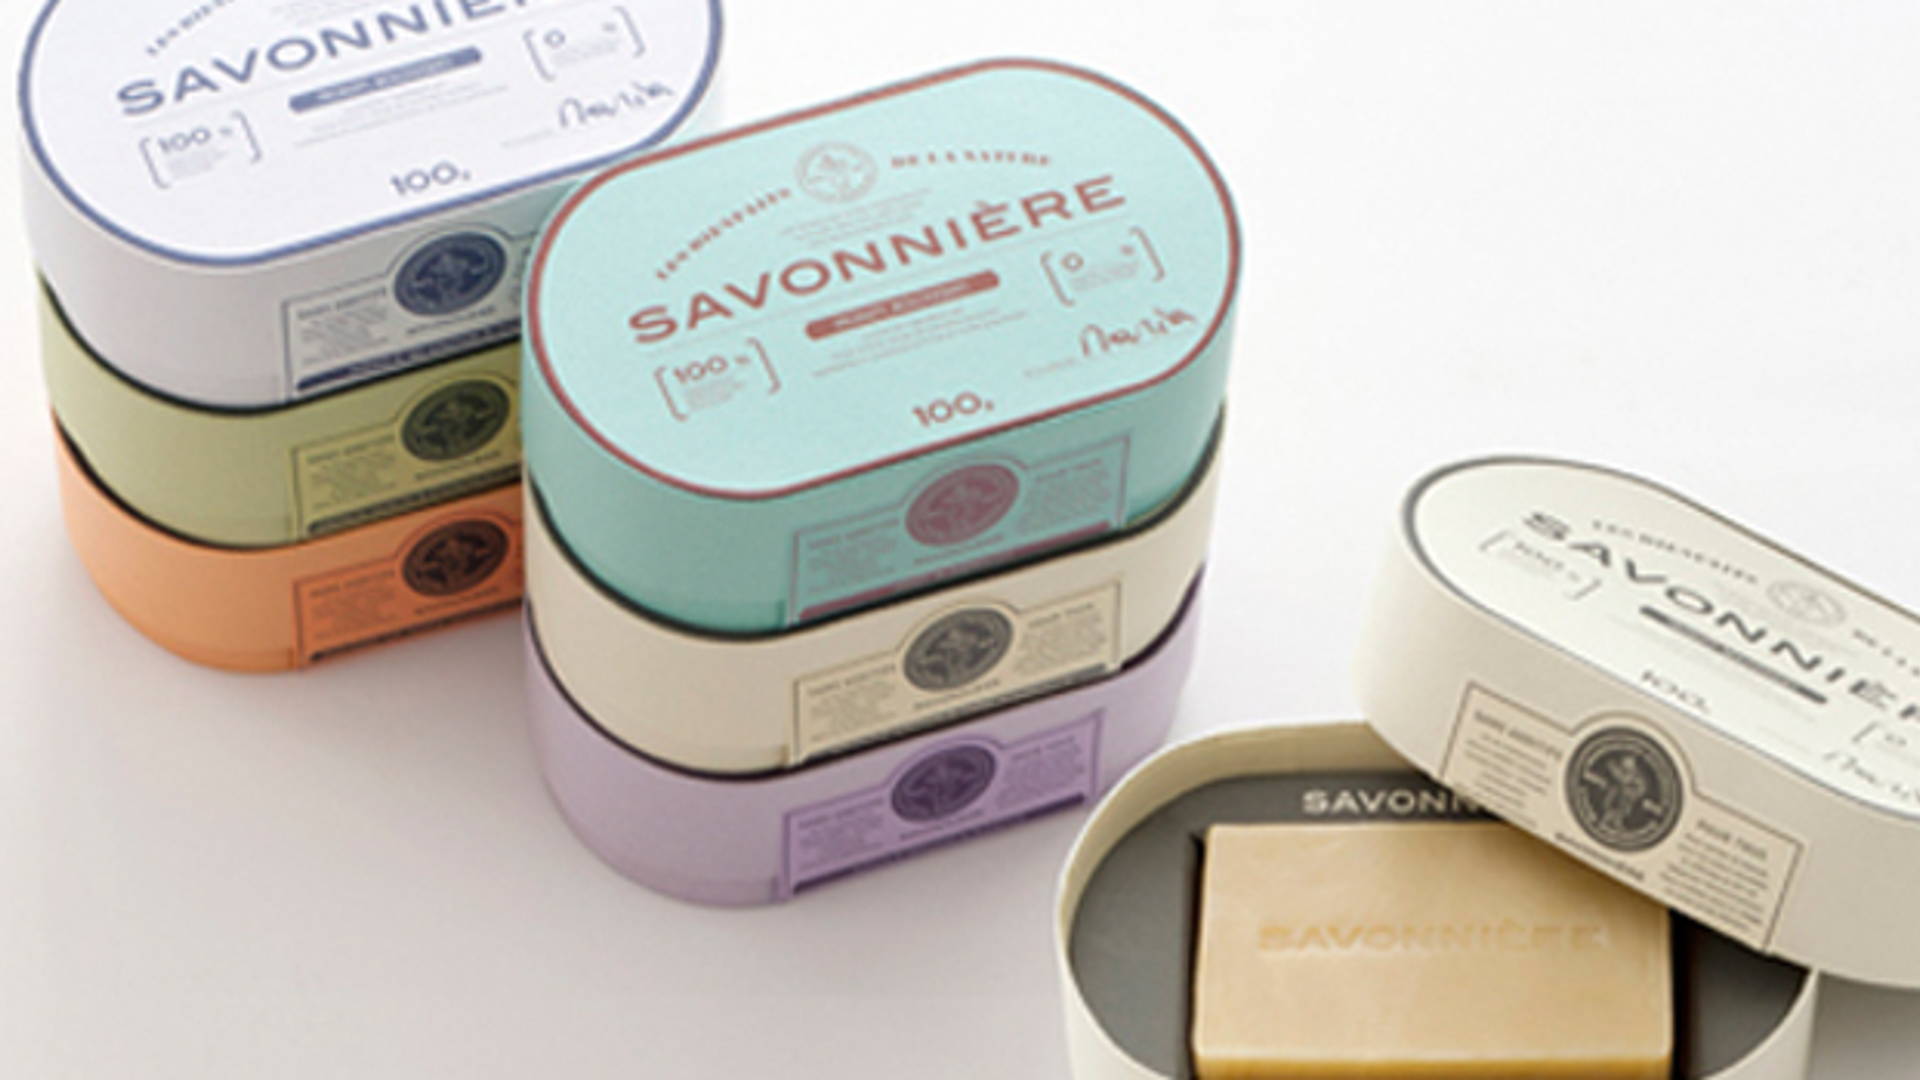 Featured image for Soap Savonnière